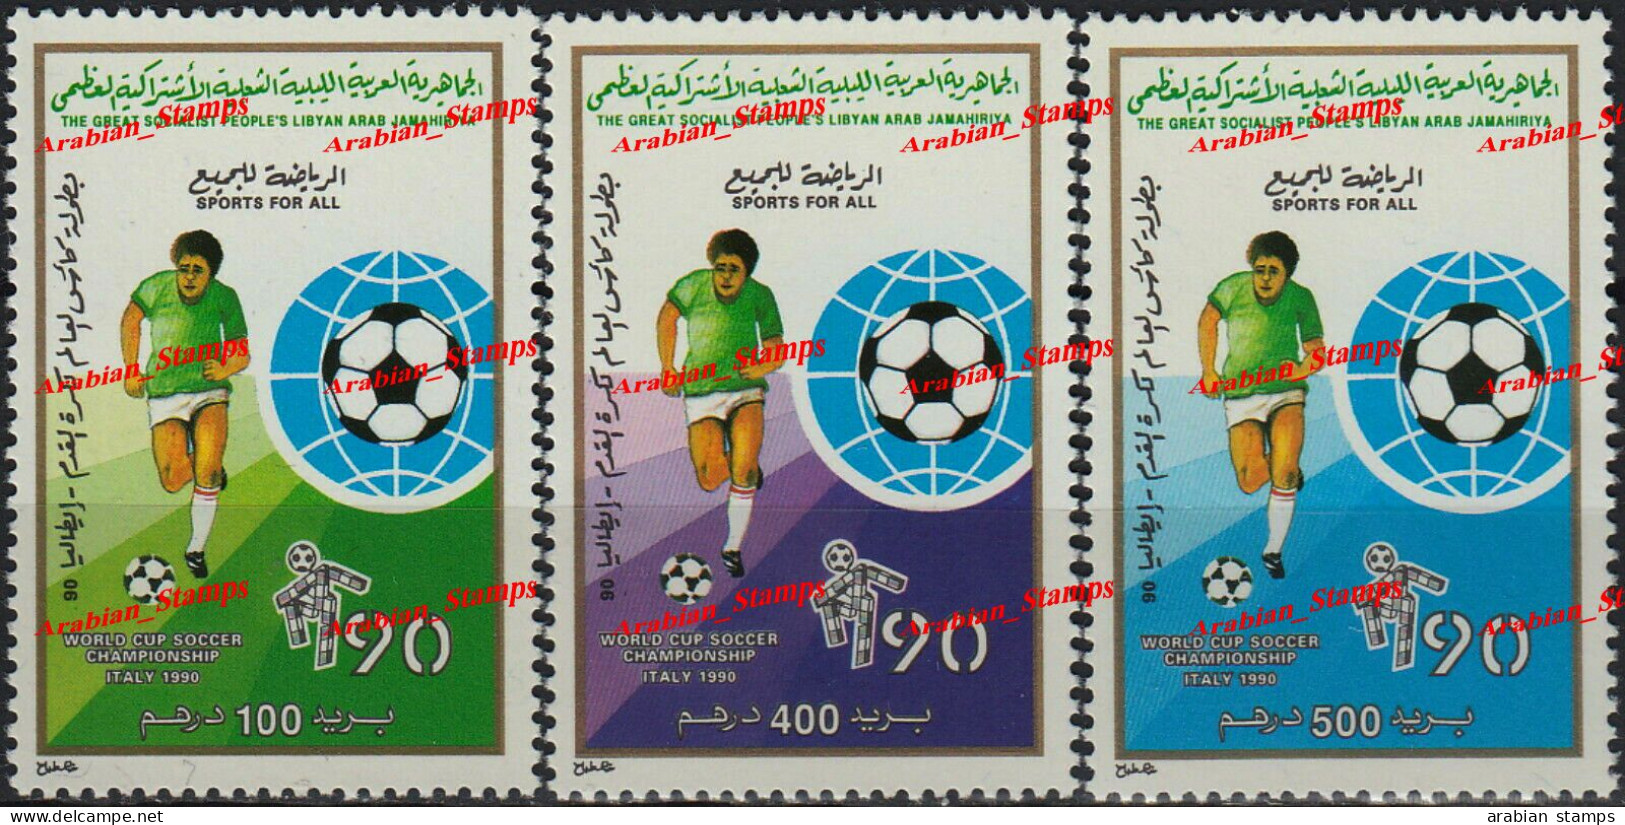 LIBYA 1990 SOCCER FOOTBALL WORLD CUP COUPE DU MONDE ITALY ITALIE SET MNH - Libya